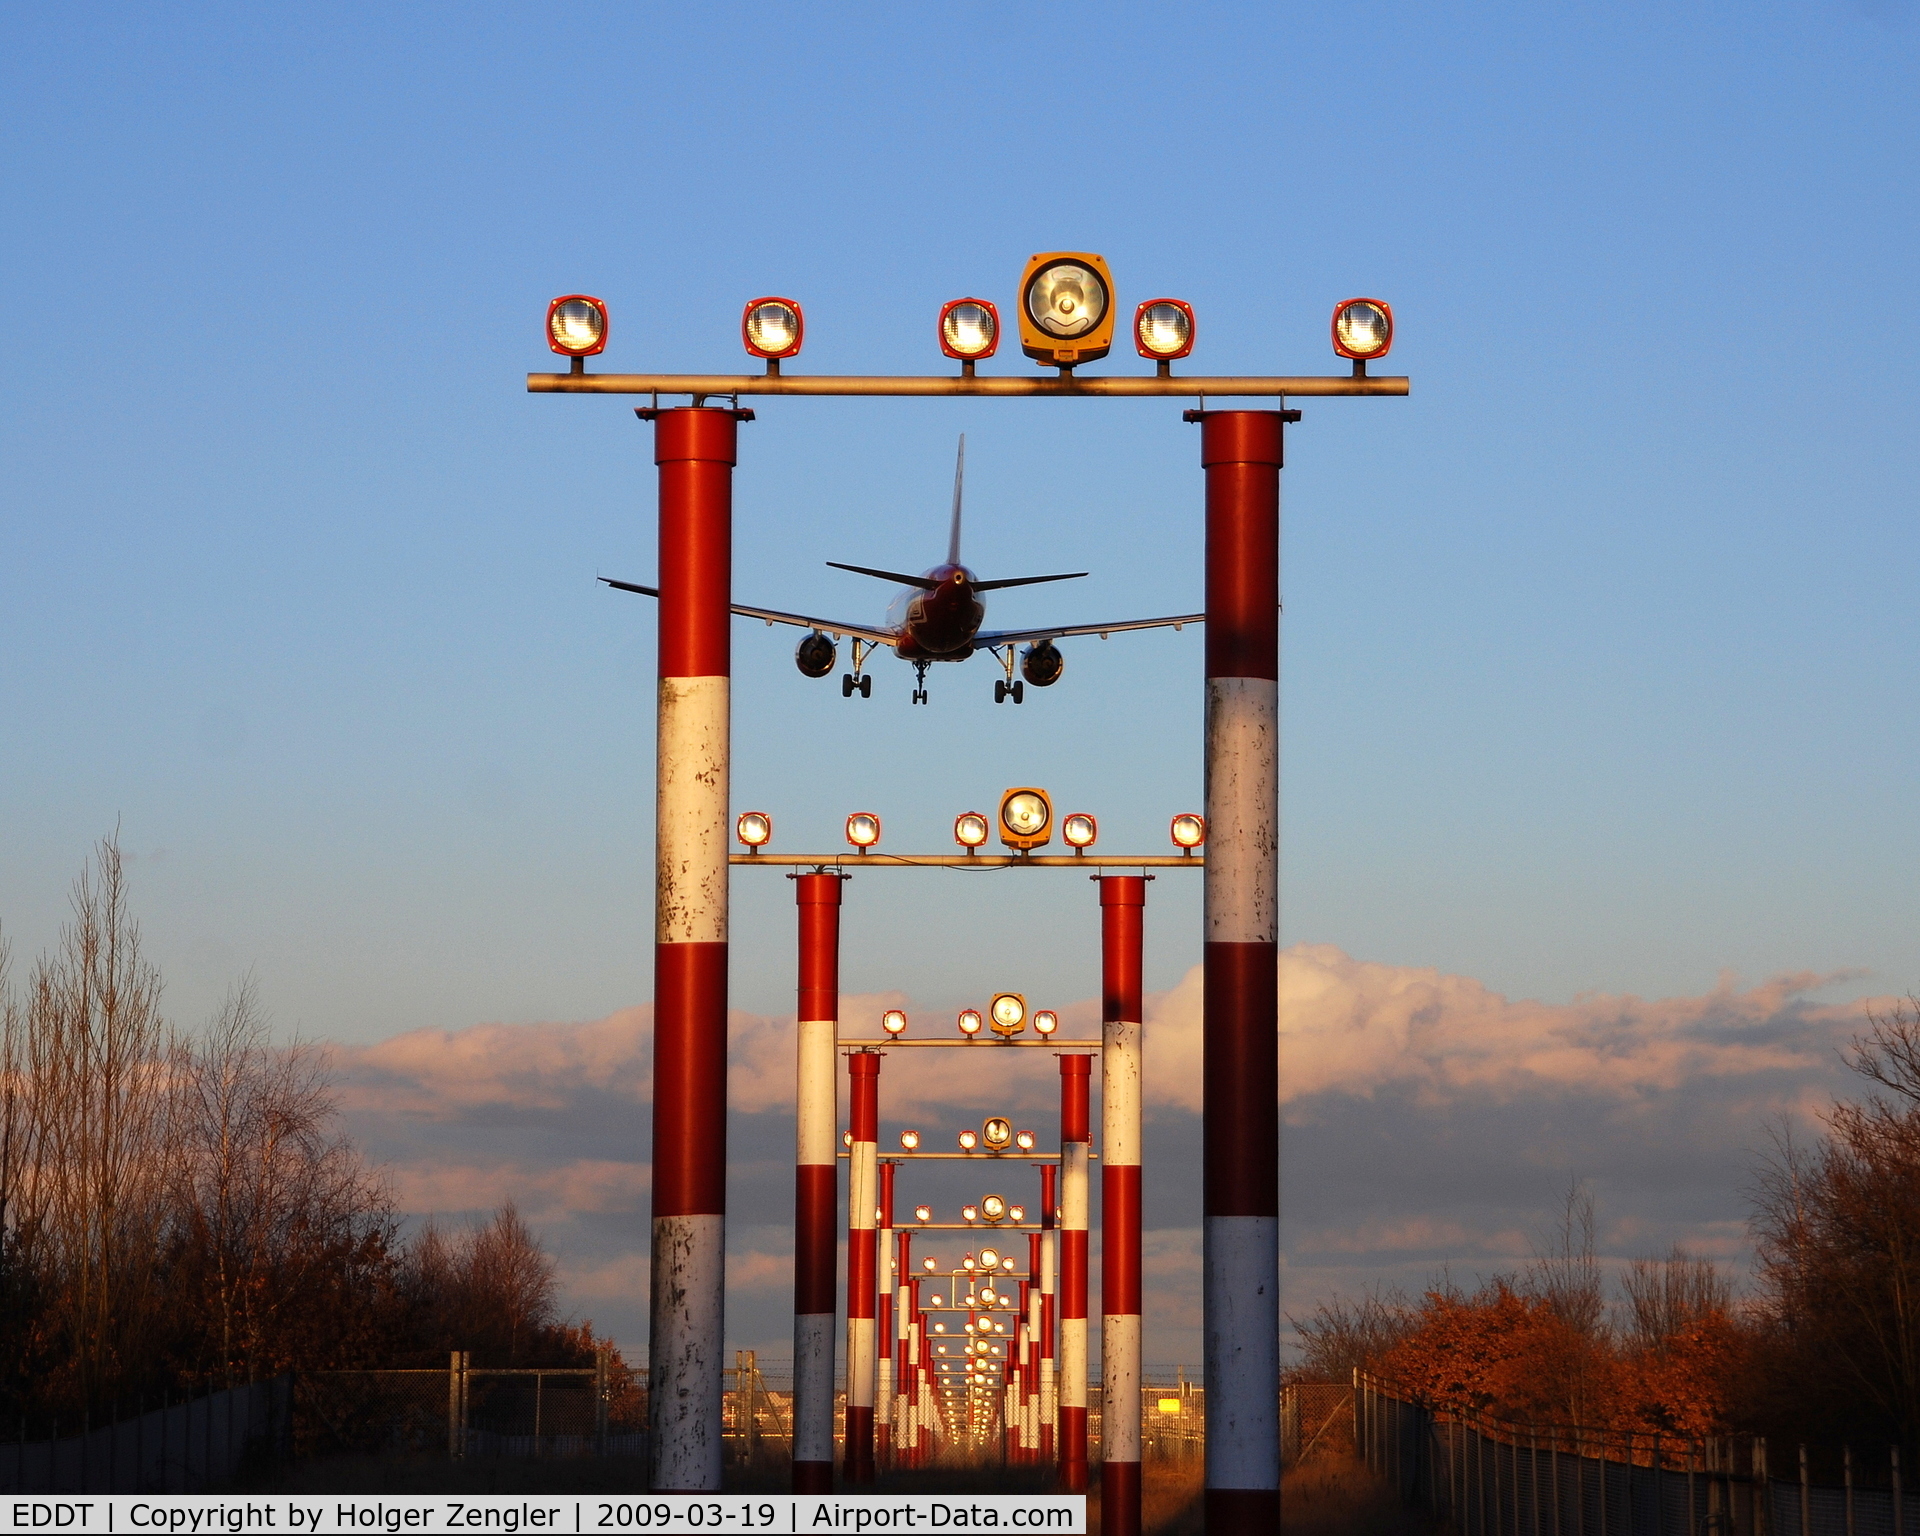 Tegel International Airport (closing in 2011), Berlin Germany (EDDT) - Sunset glow at TXL